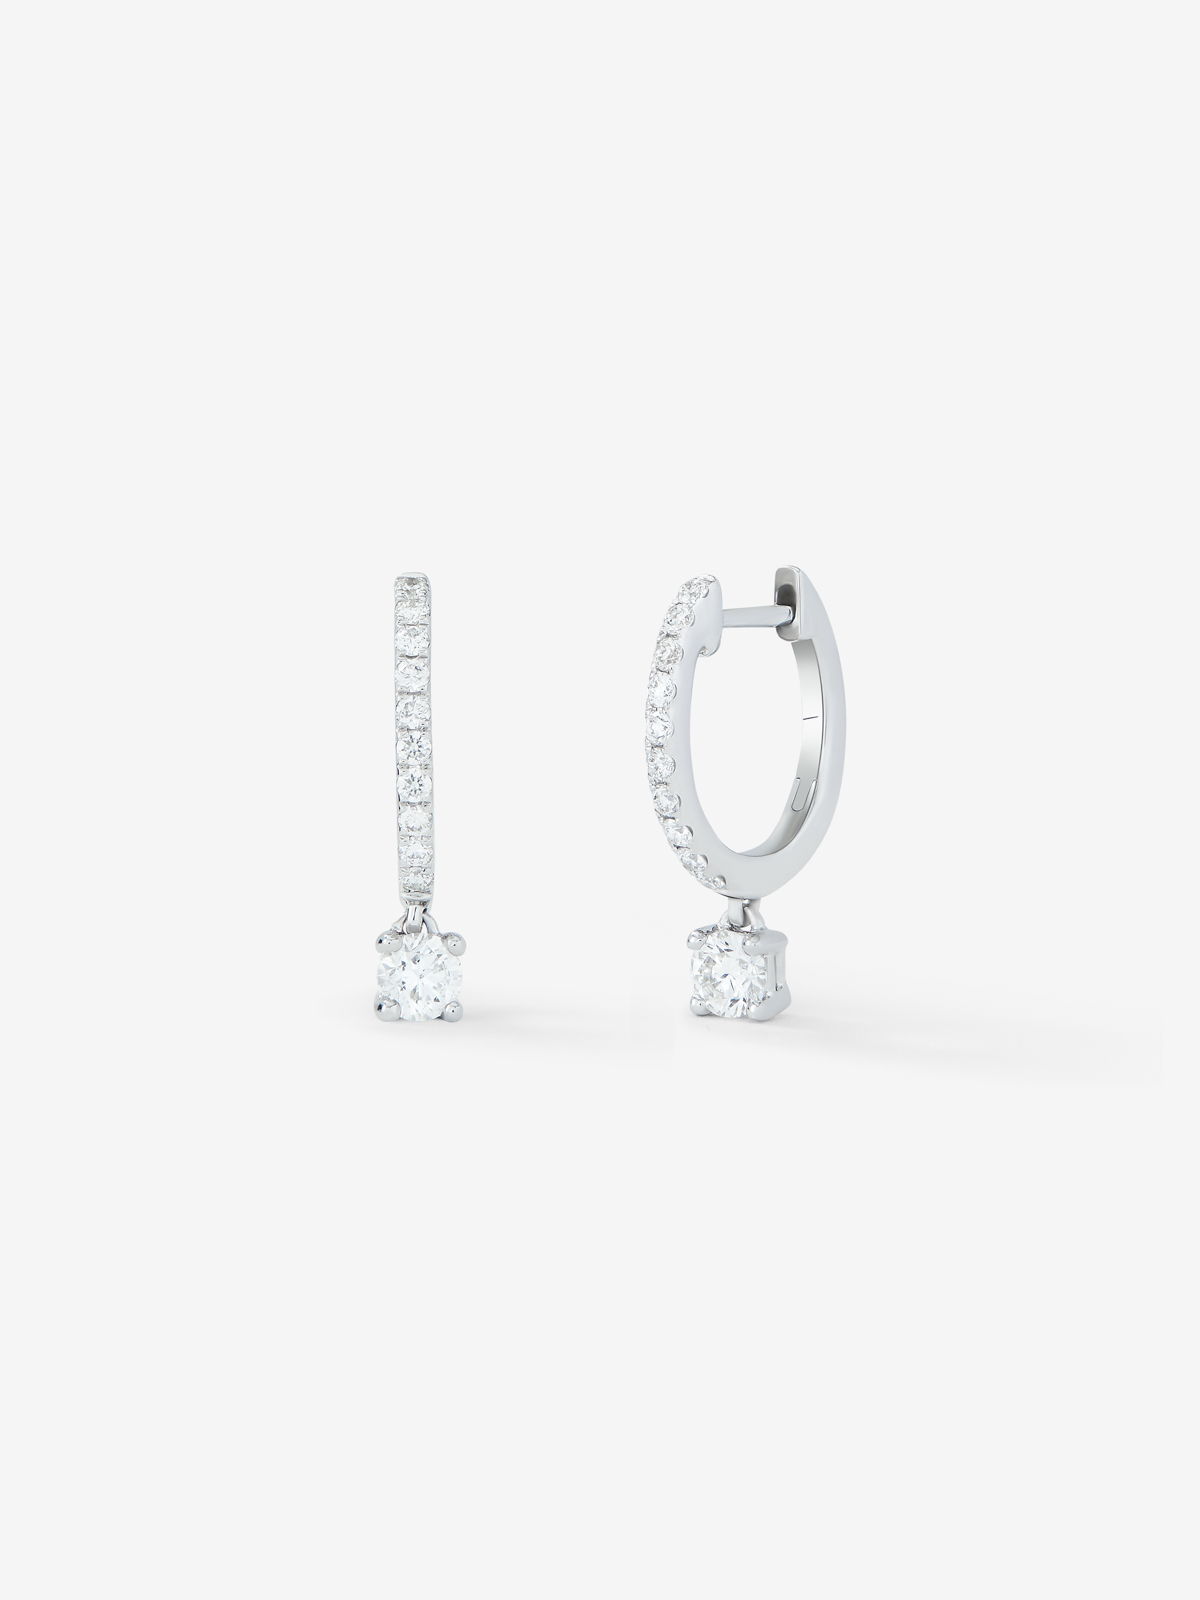 18K white gold hoop earrings with diamond pendants